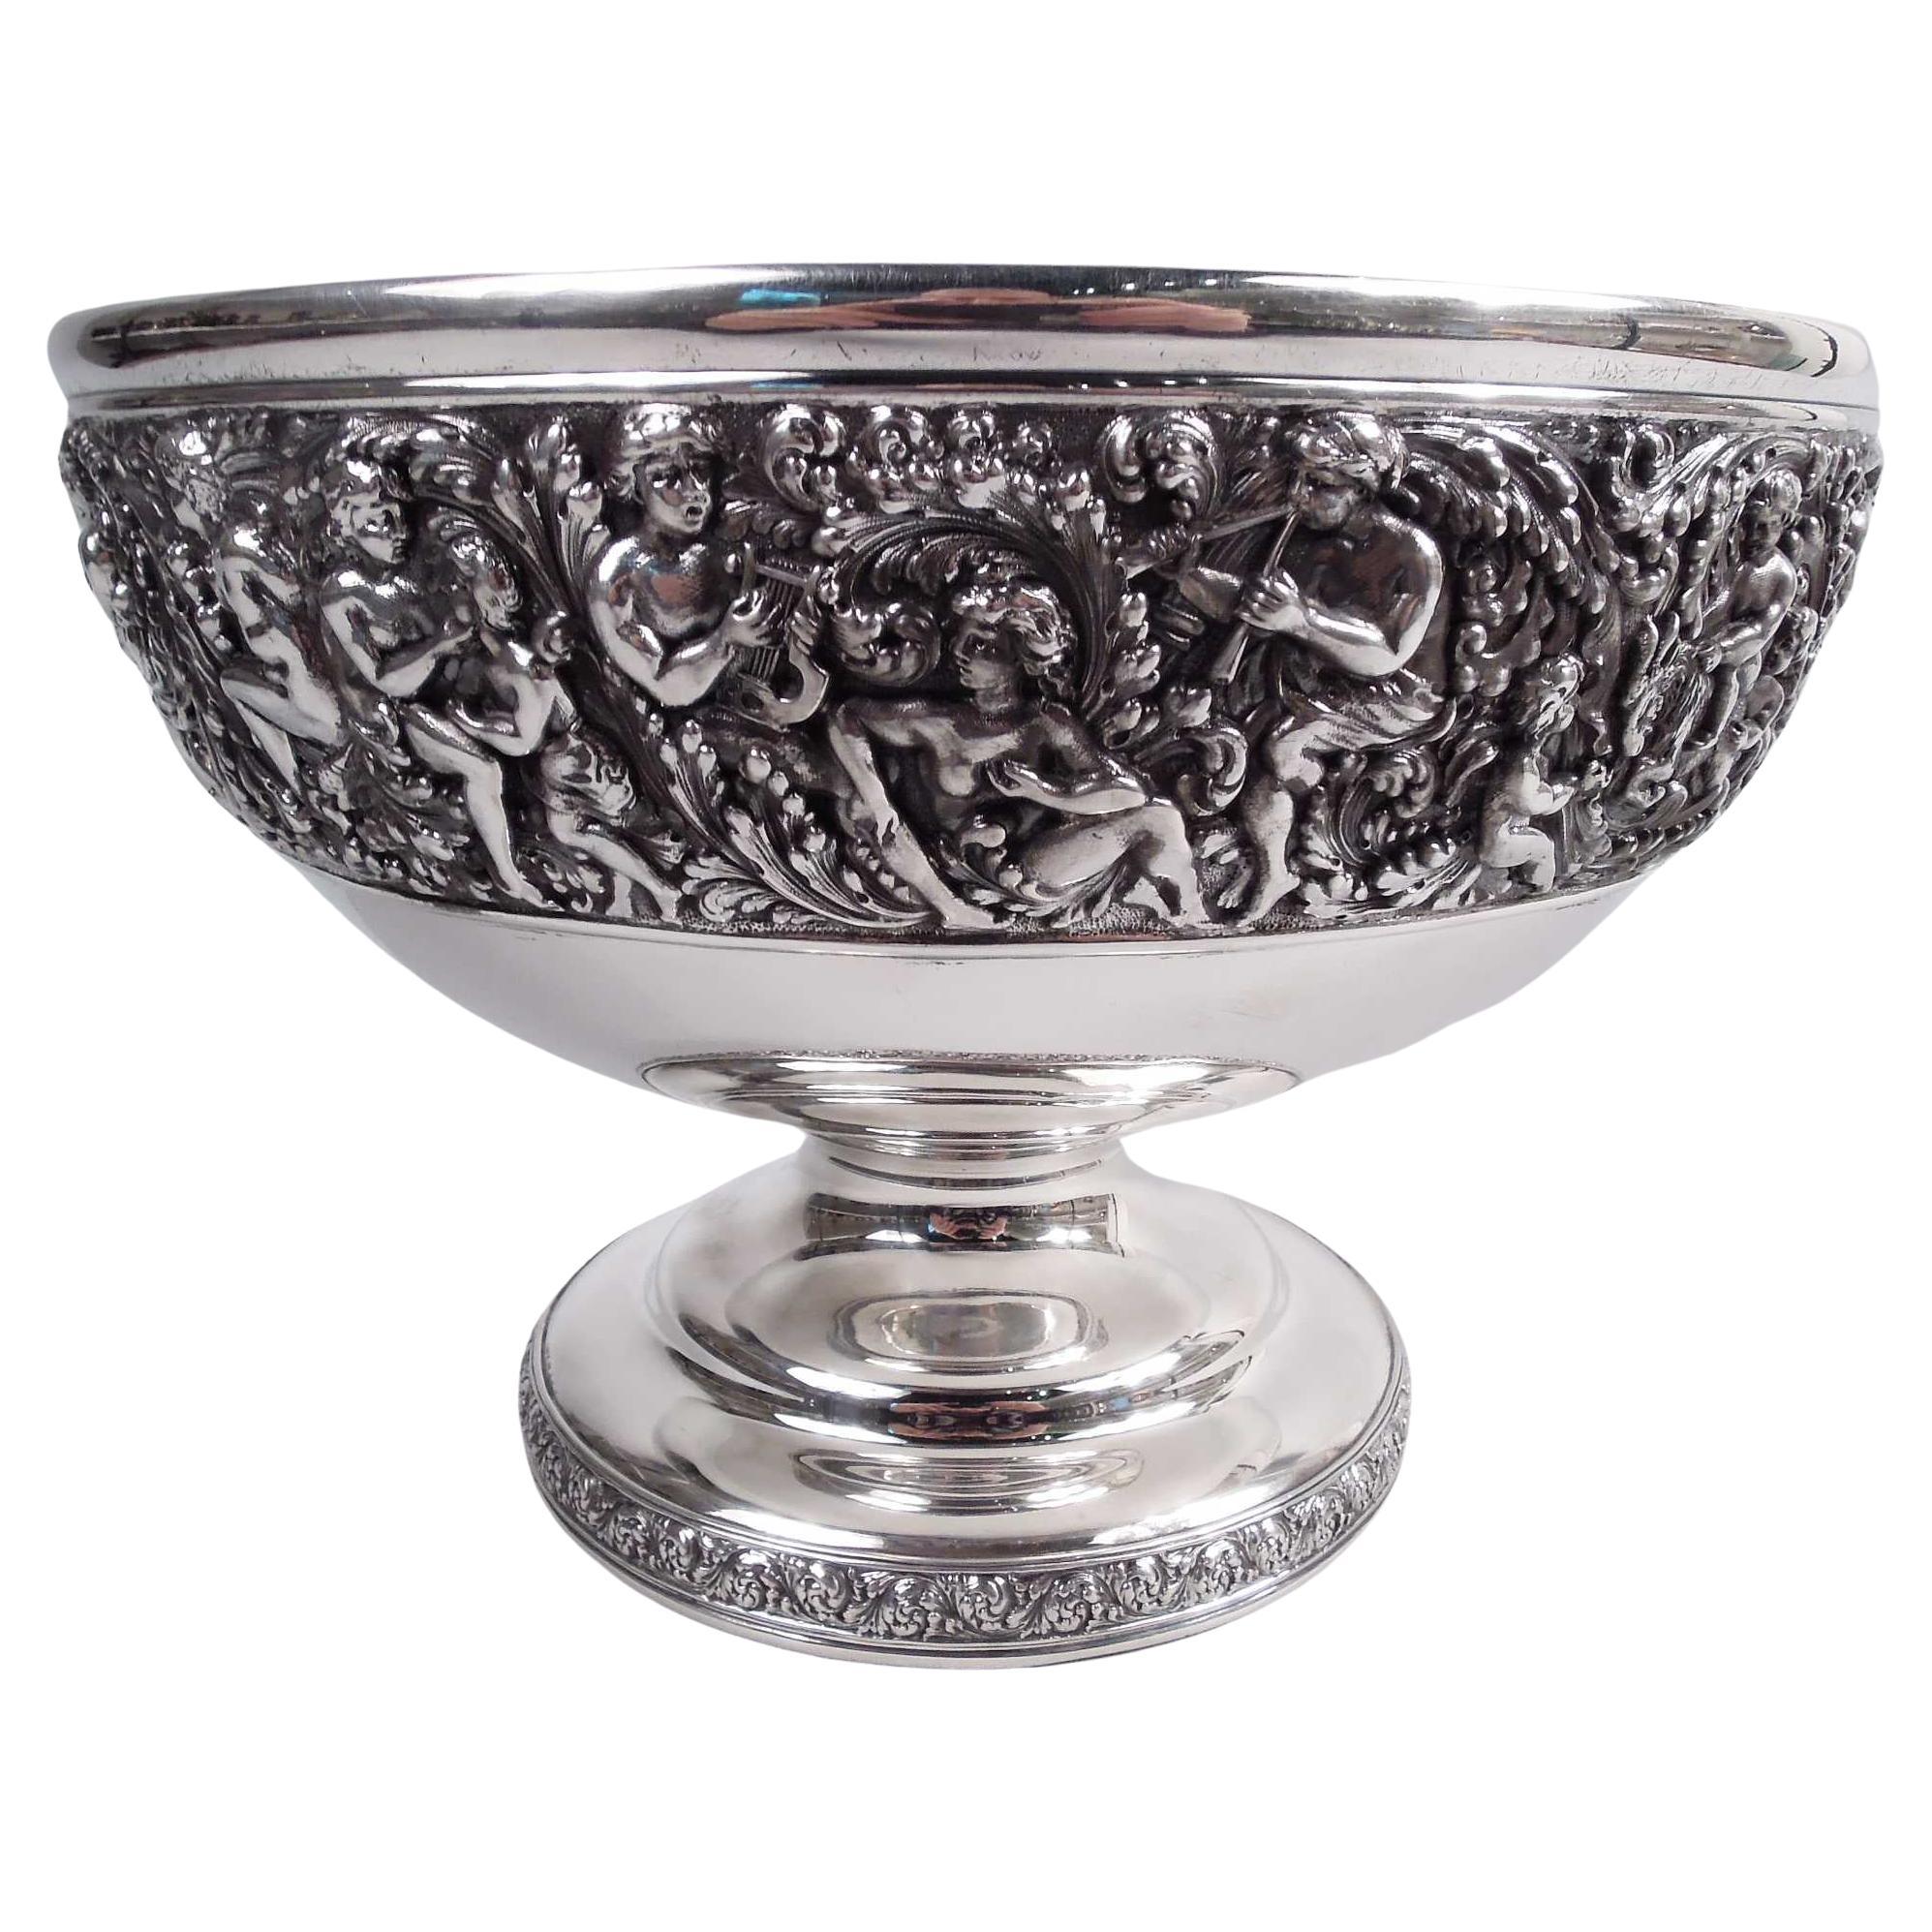 Tiffany Sterling Silver Centerpiece Bowl in Beaux Arts Olympian